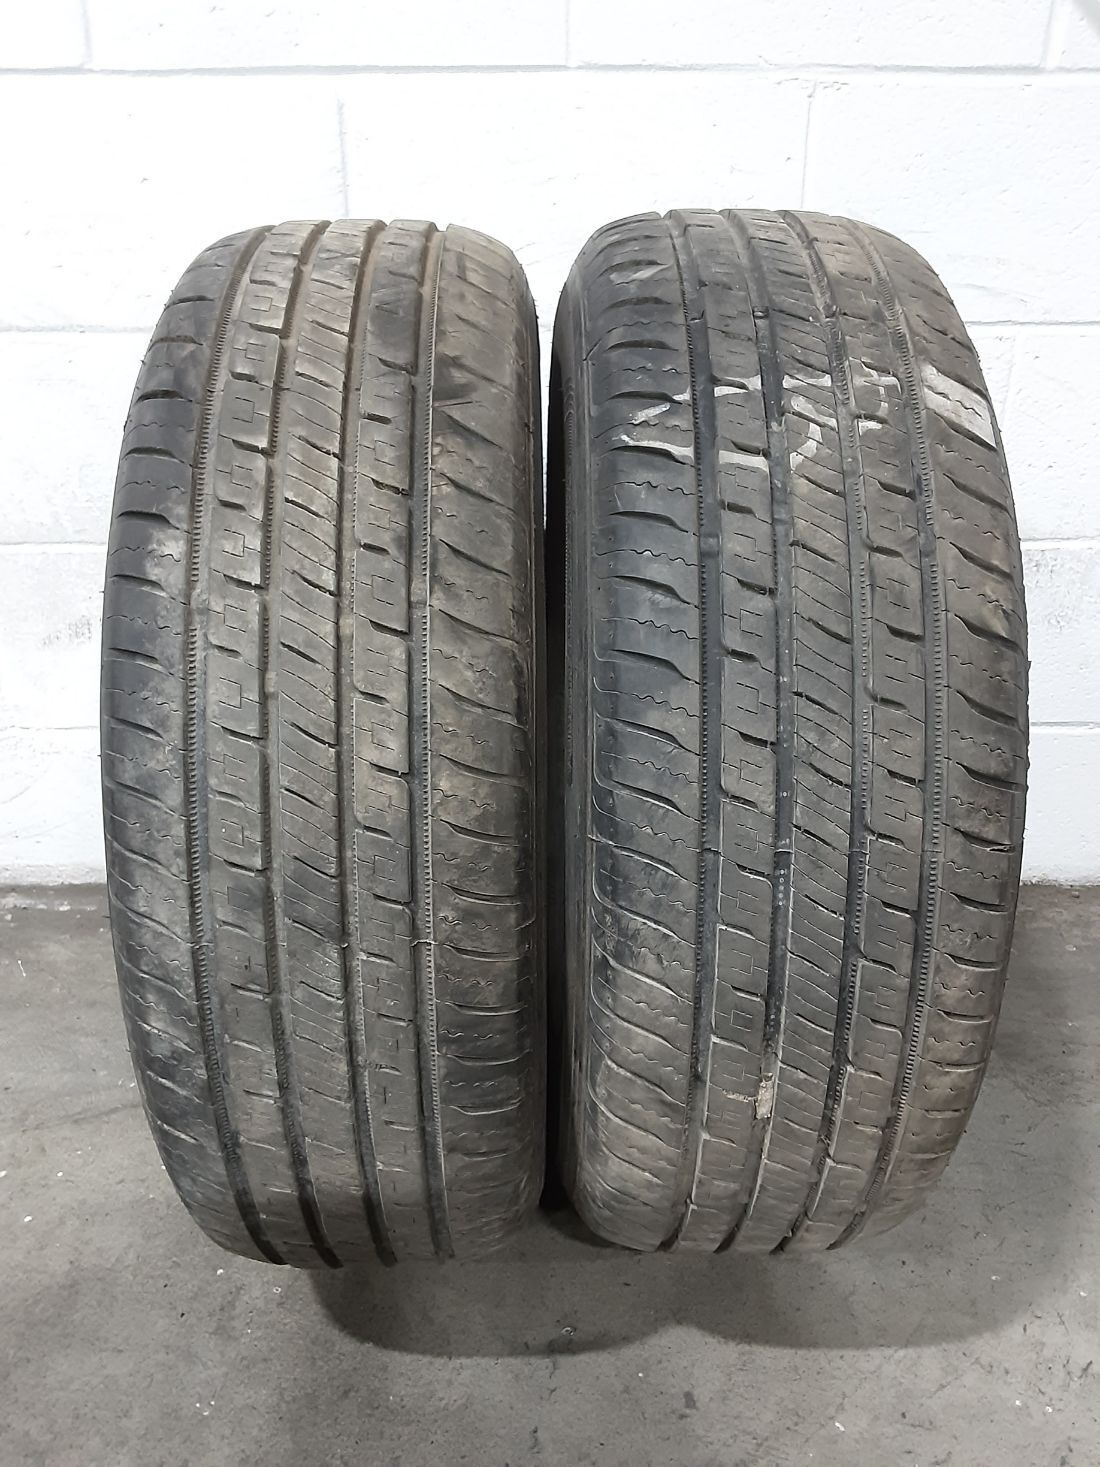 2x P225/65R17 Vercelli Strada I 8/32 Used Tires